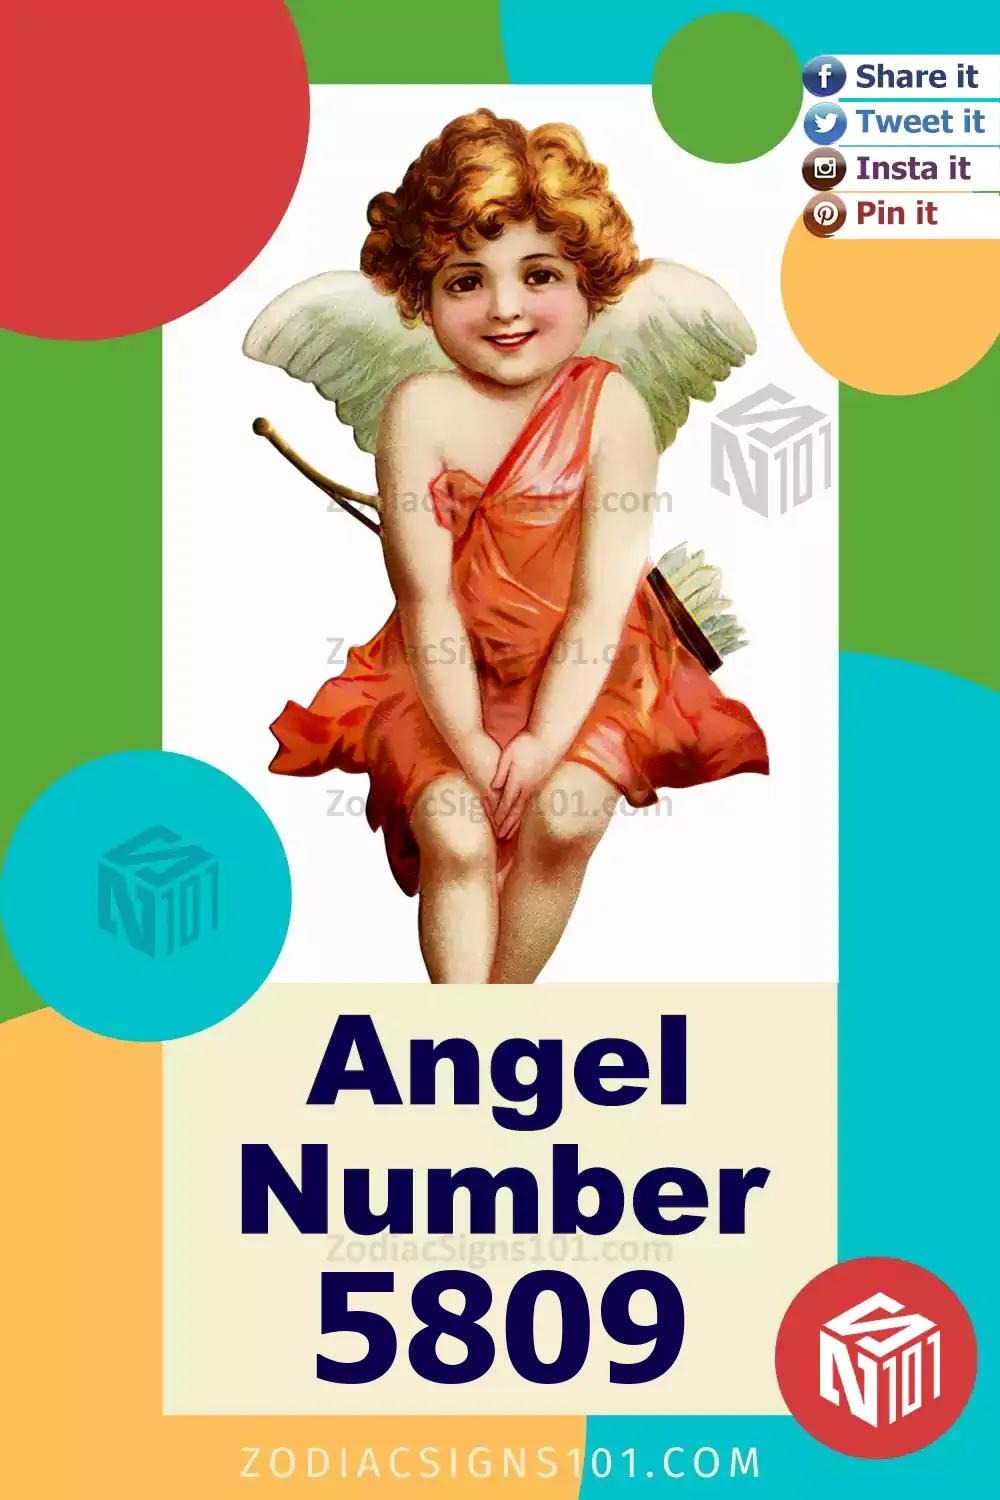 5809-Angel-Number-Meaning.jpg